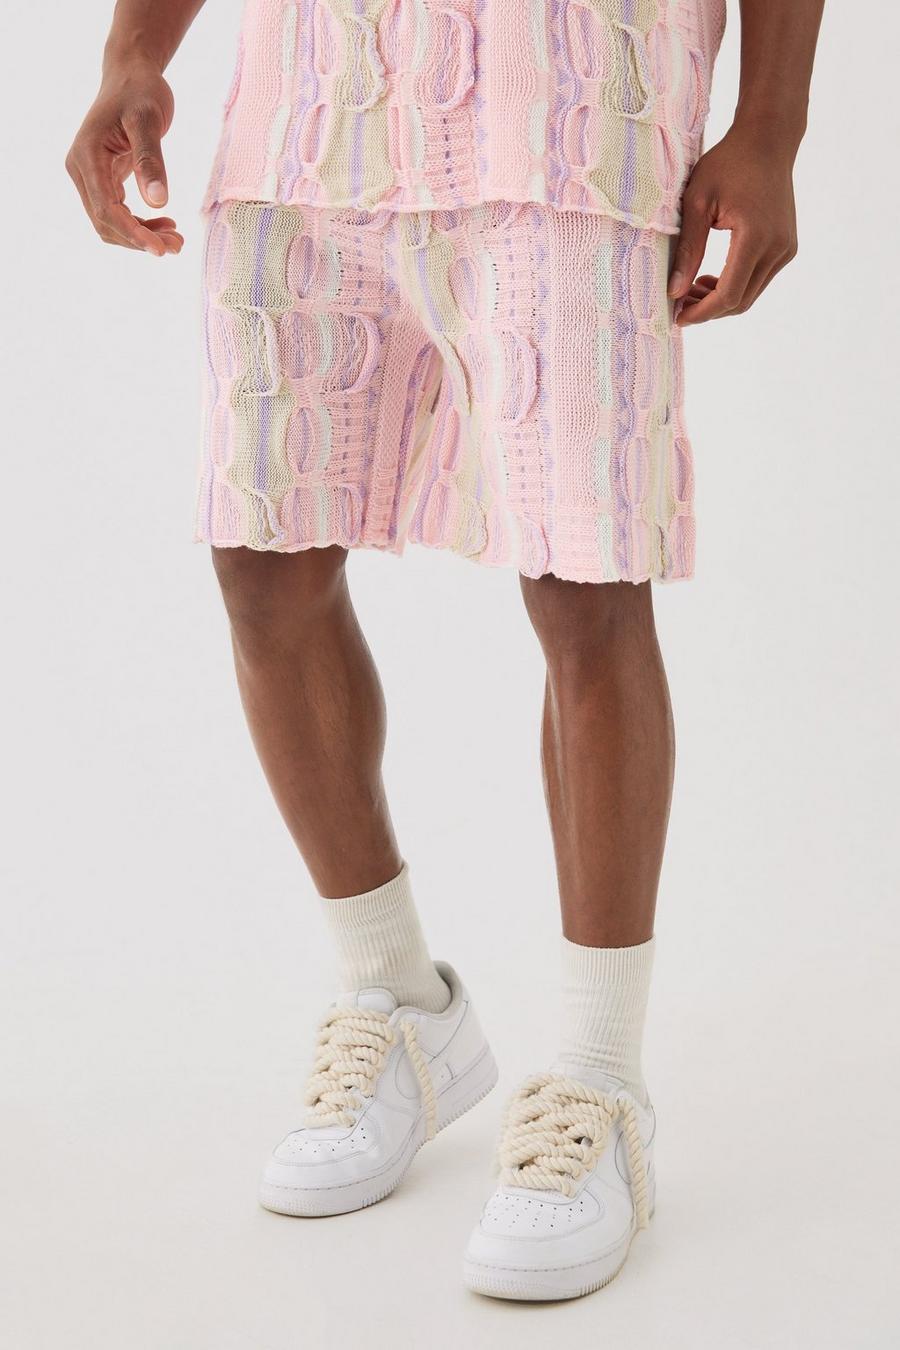 Lockere Shorts, Pink